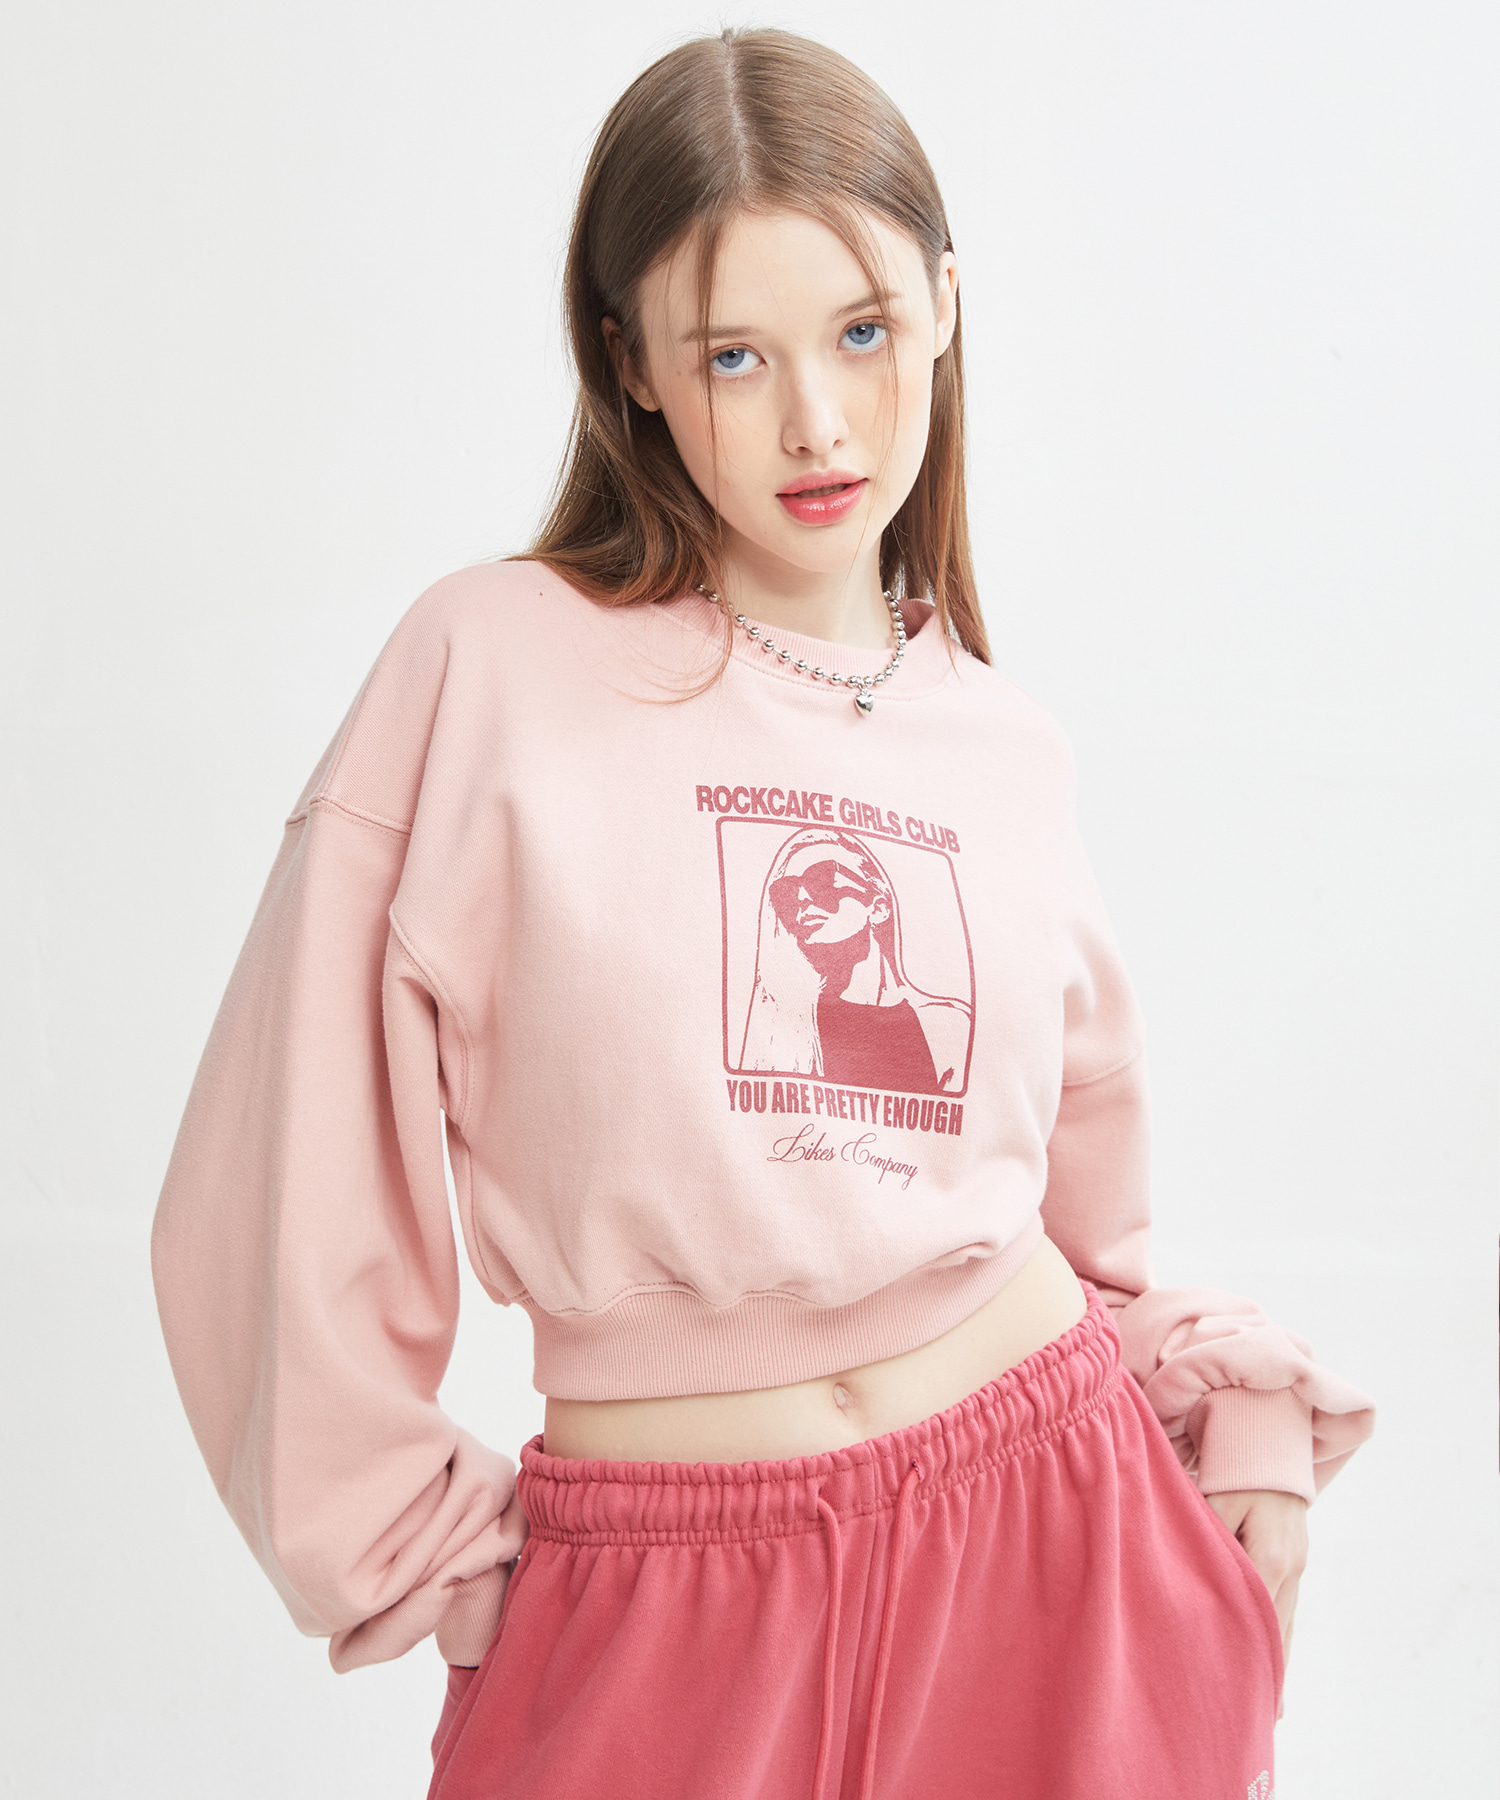 Girls Club Cropped Sweatshirt - Pink Forest